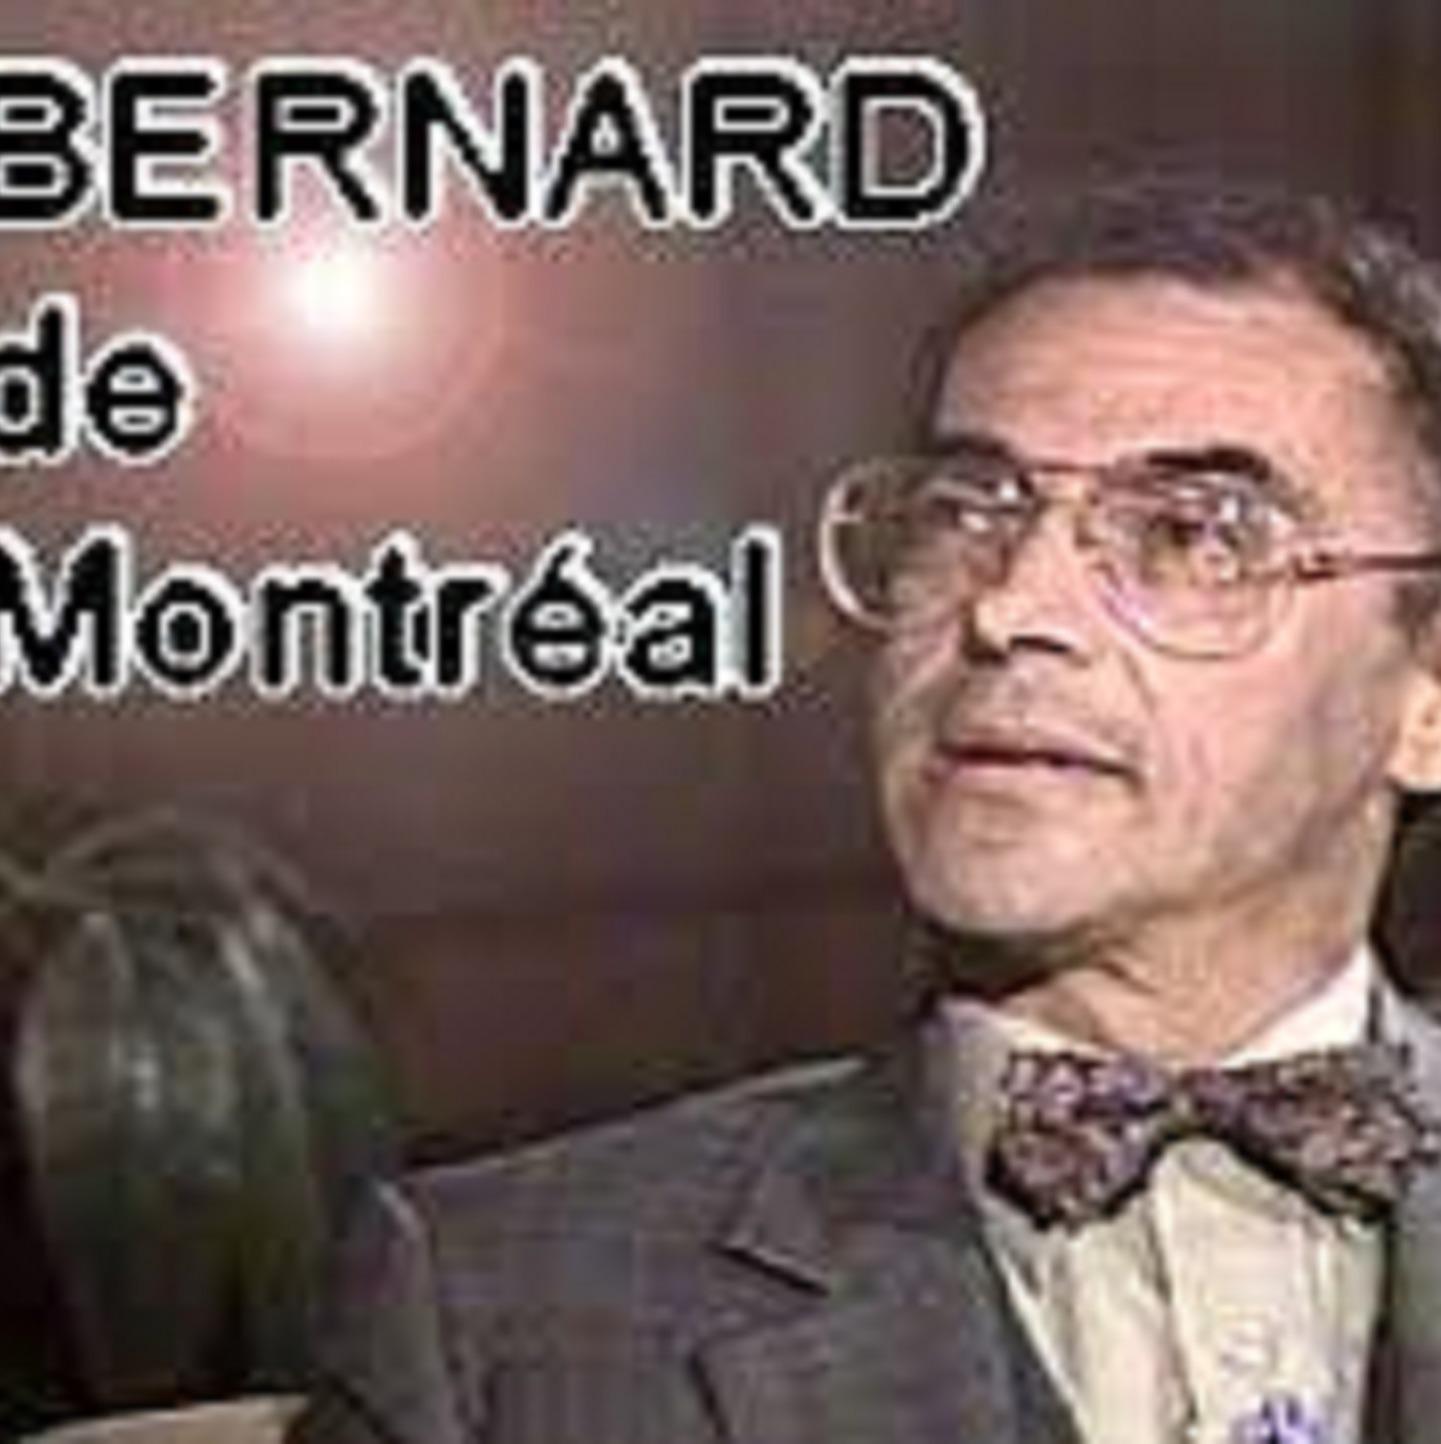 Bernard de Montréal - Glenn LE SUPRA MENTAL